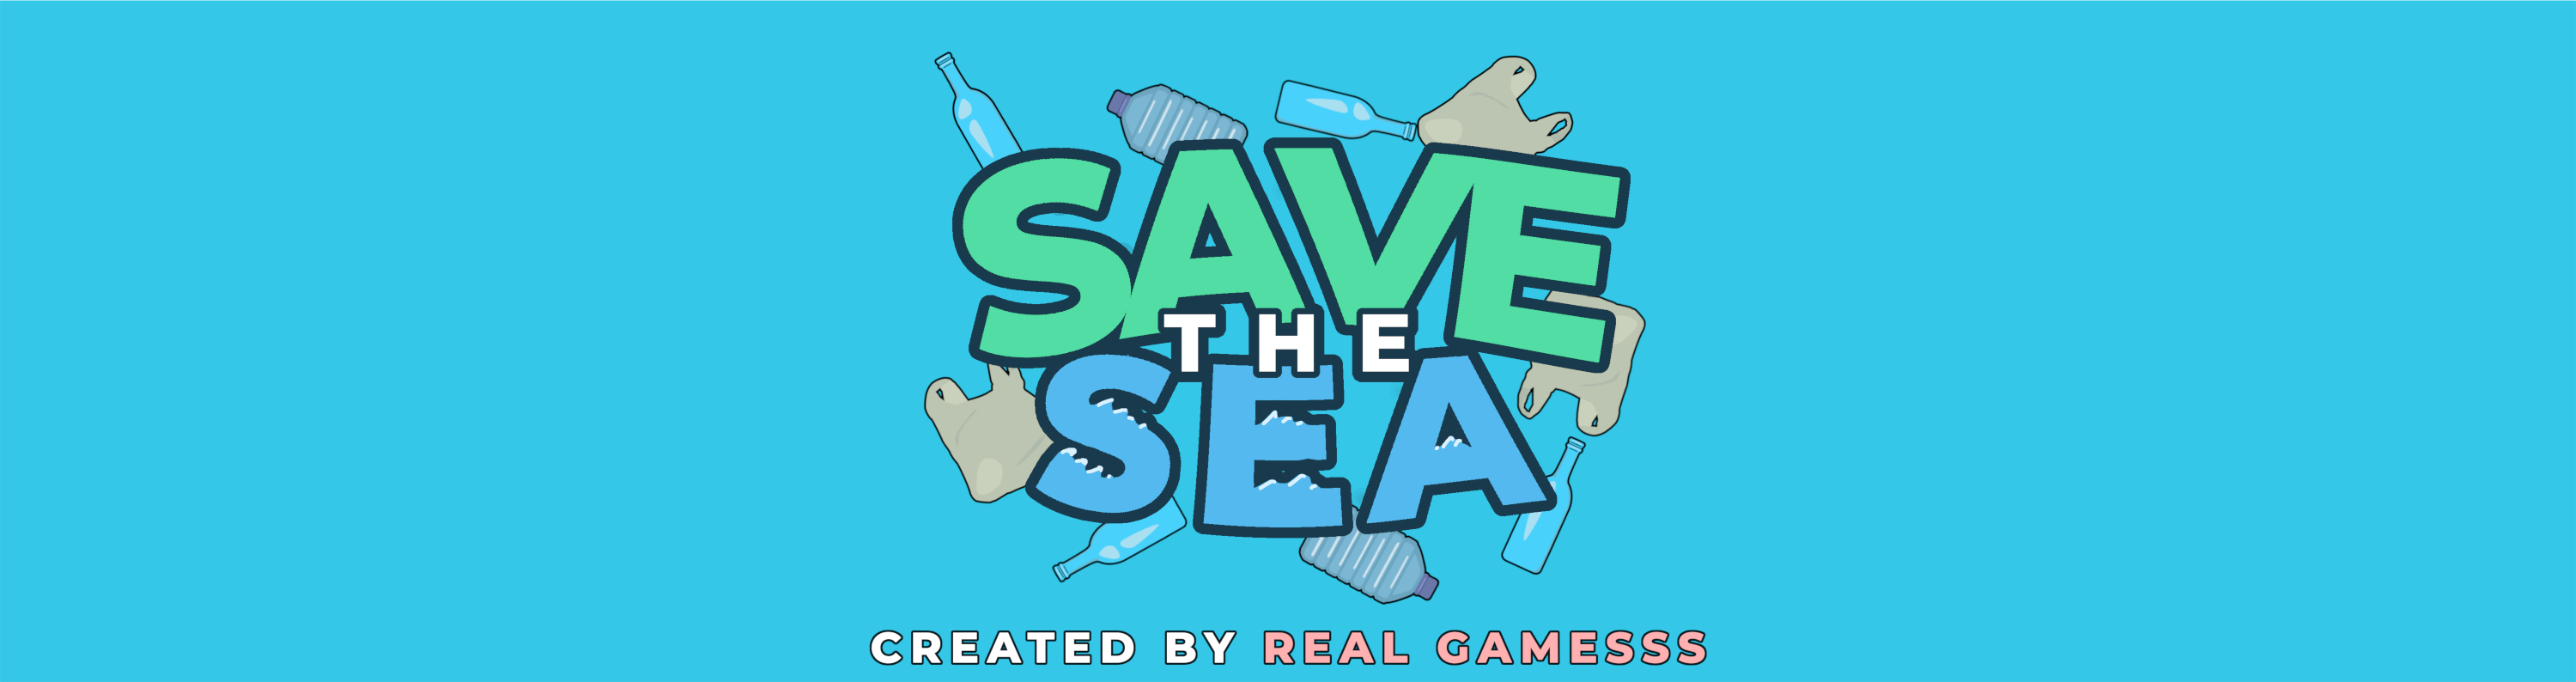 Save The Sea